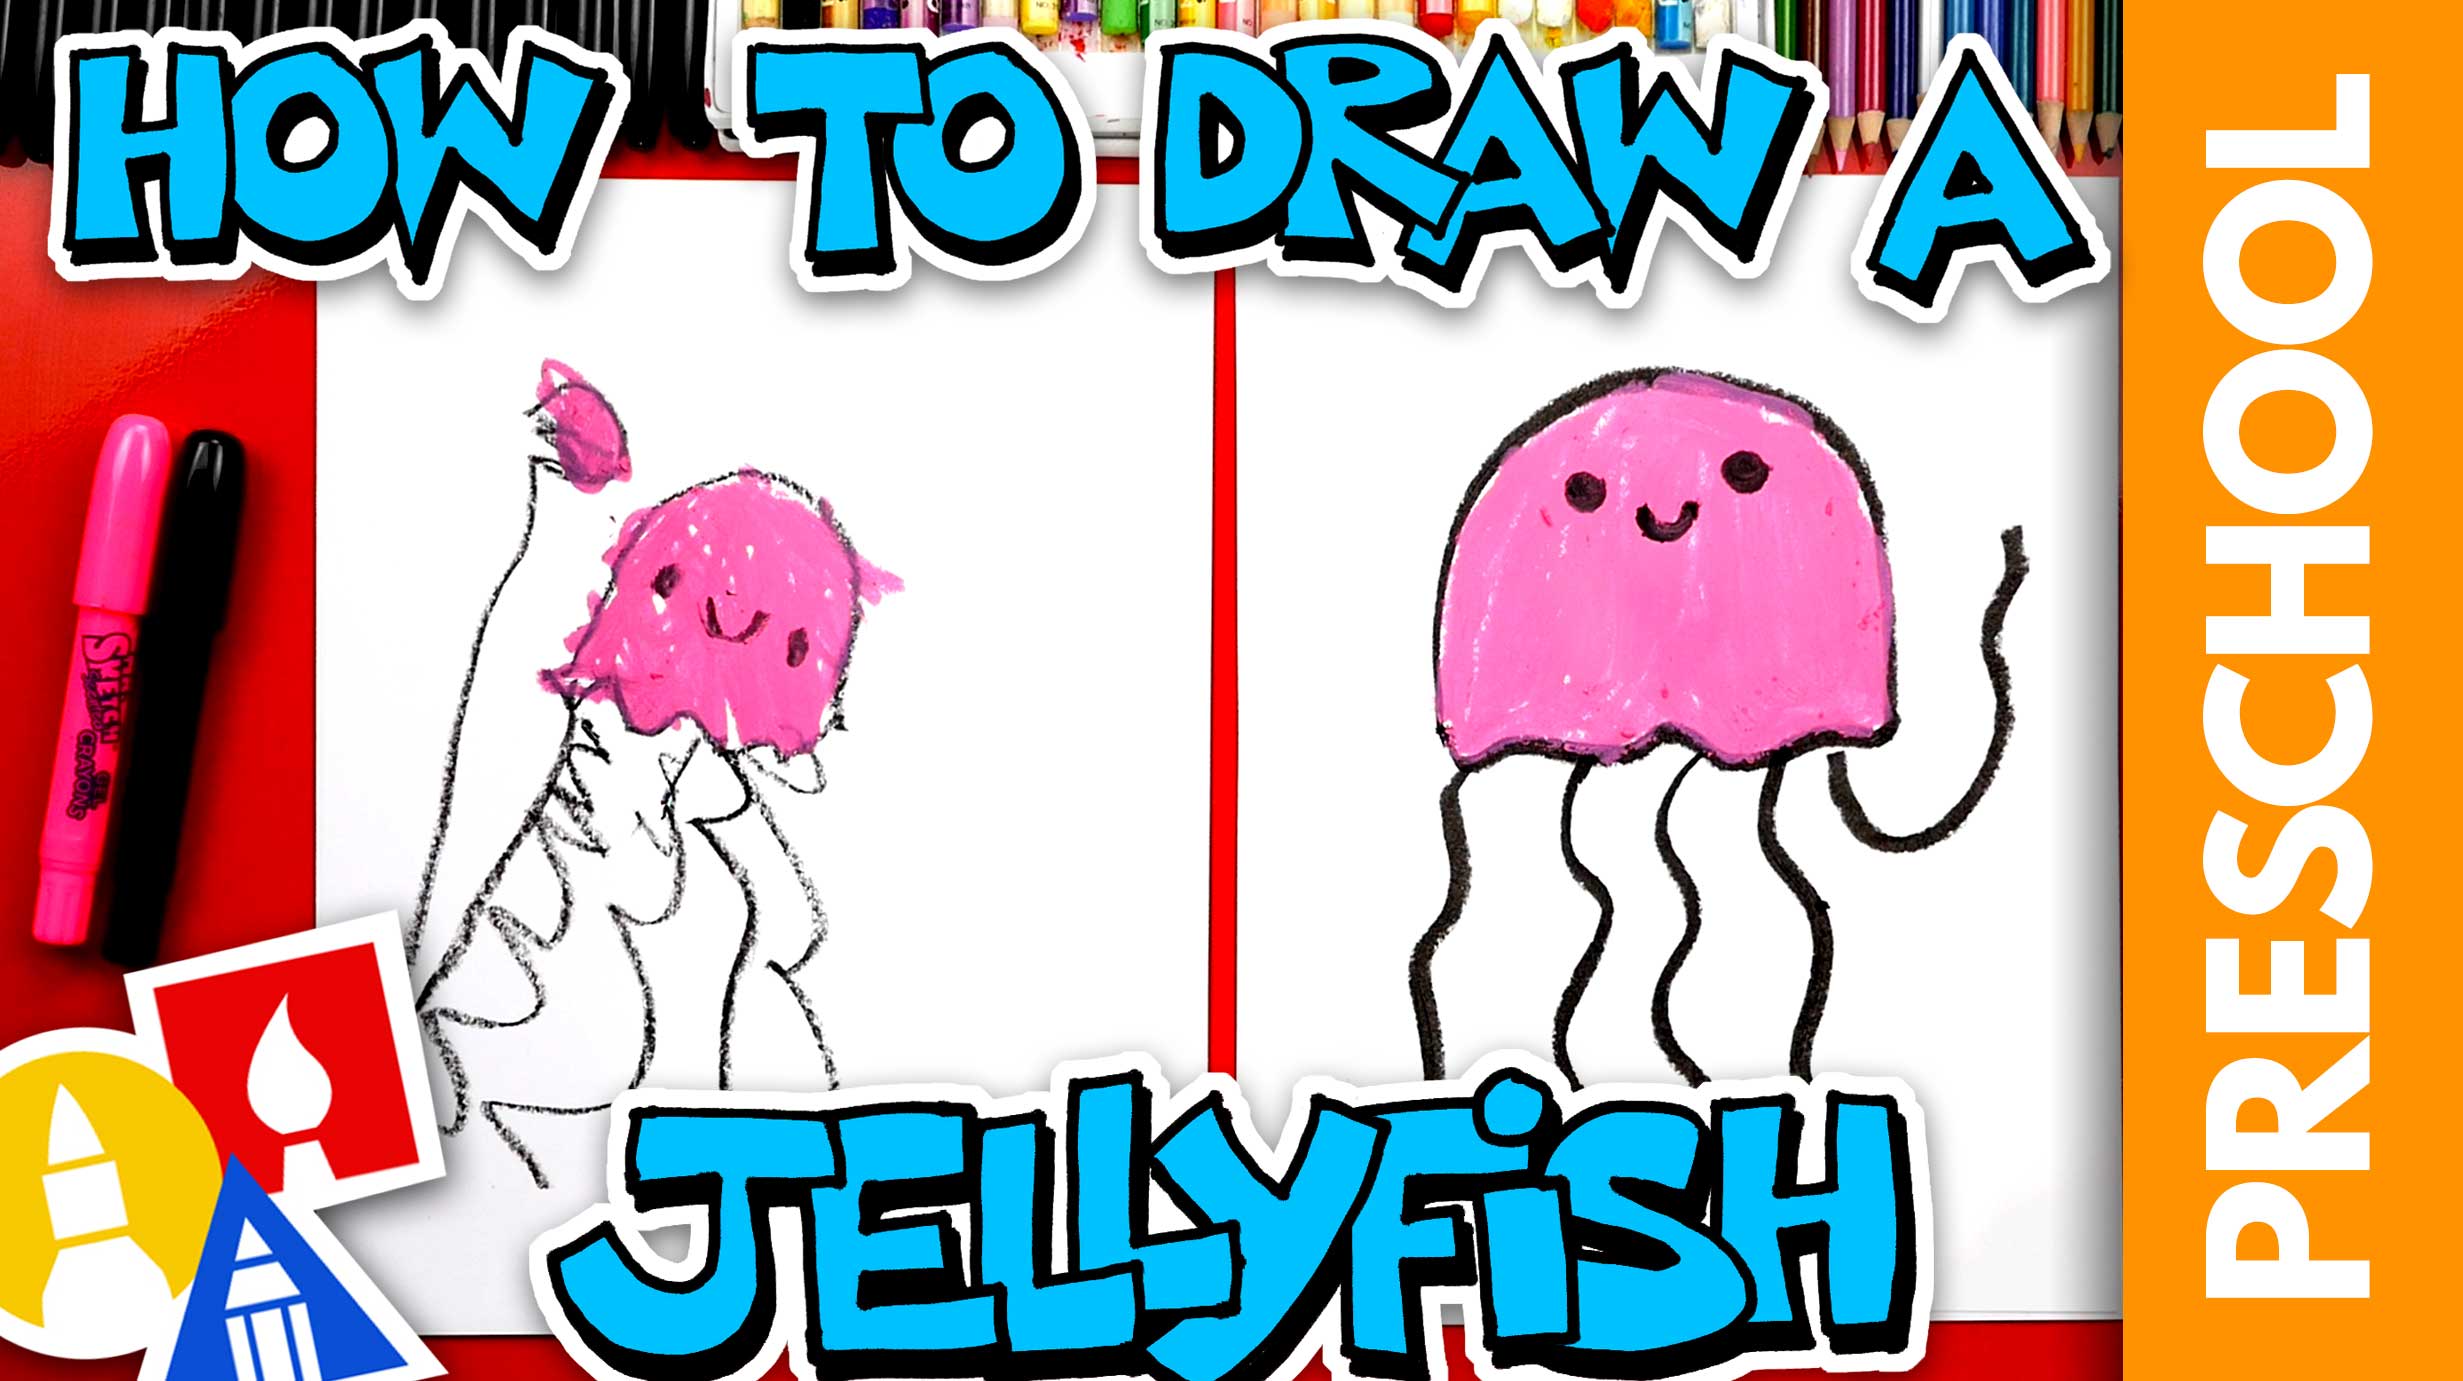 jellyfish drawings for kids